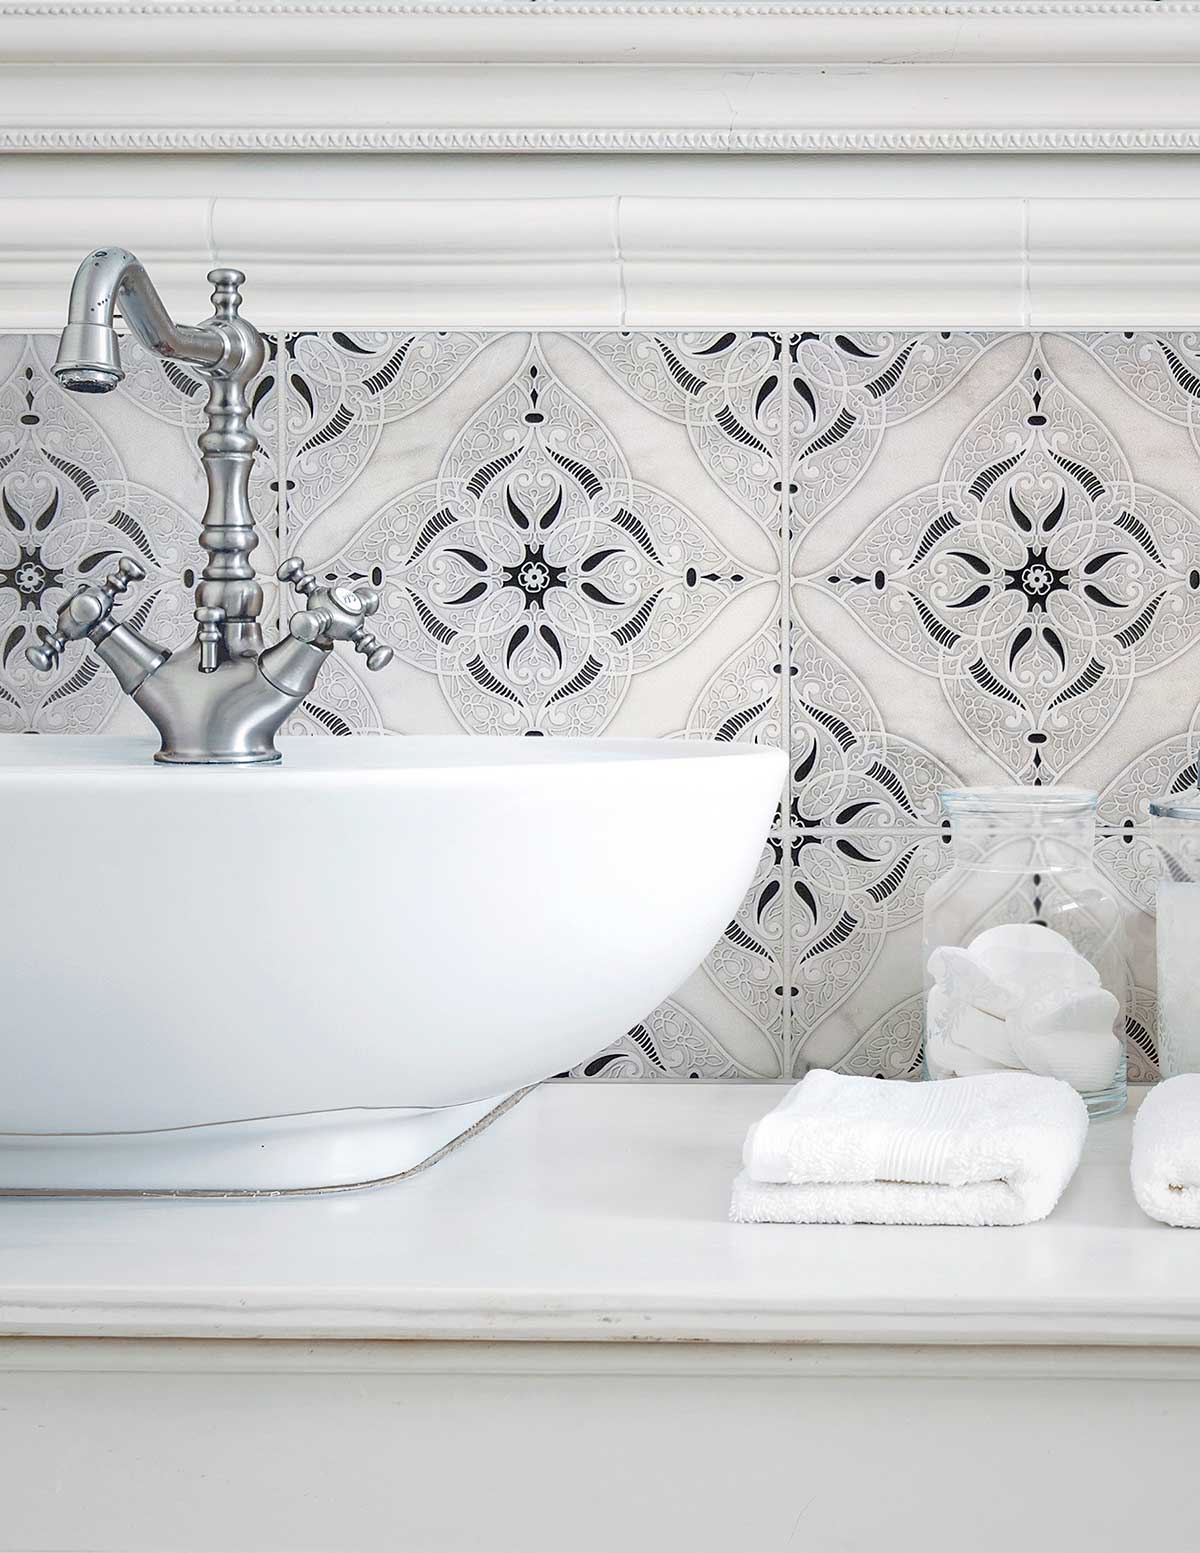 Decorative bathroom tile - Granada Coal AST Backsplash